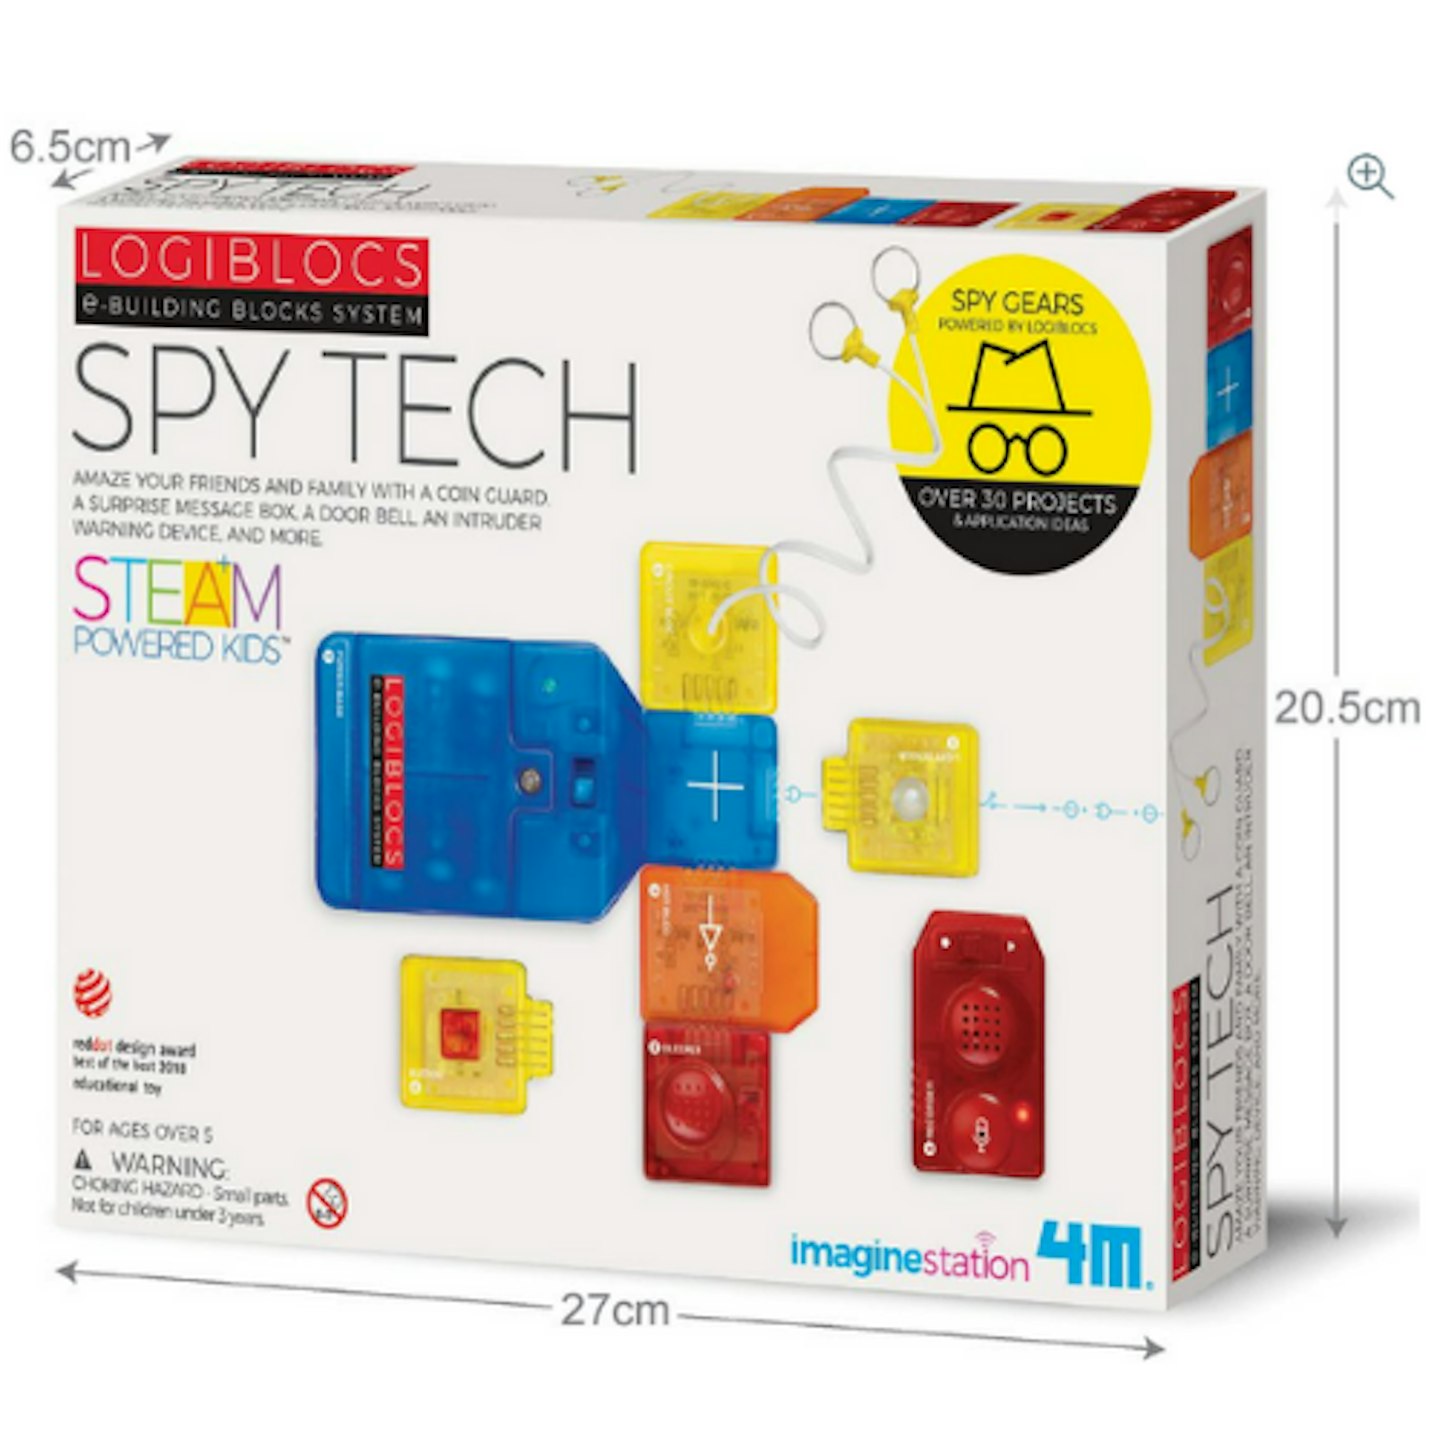 LOGIBLOCS Spy Tech Science Kit